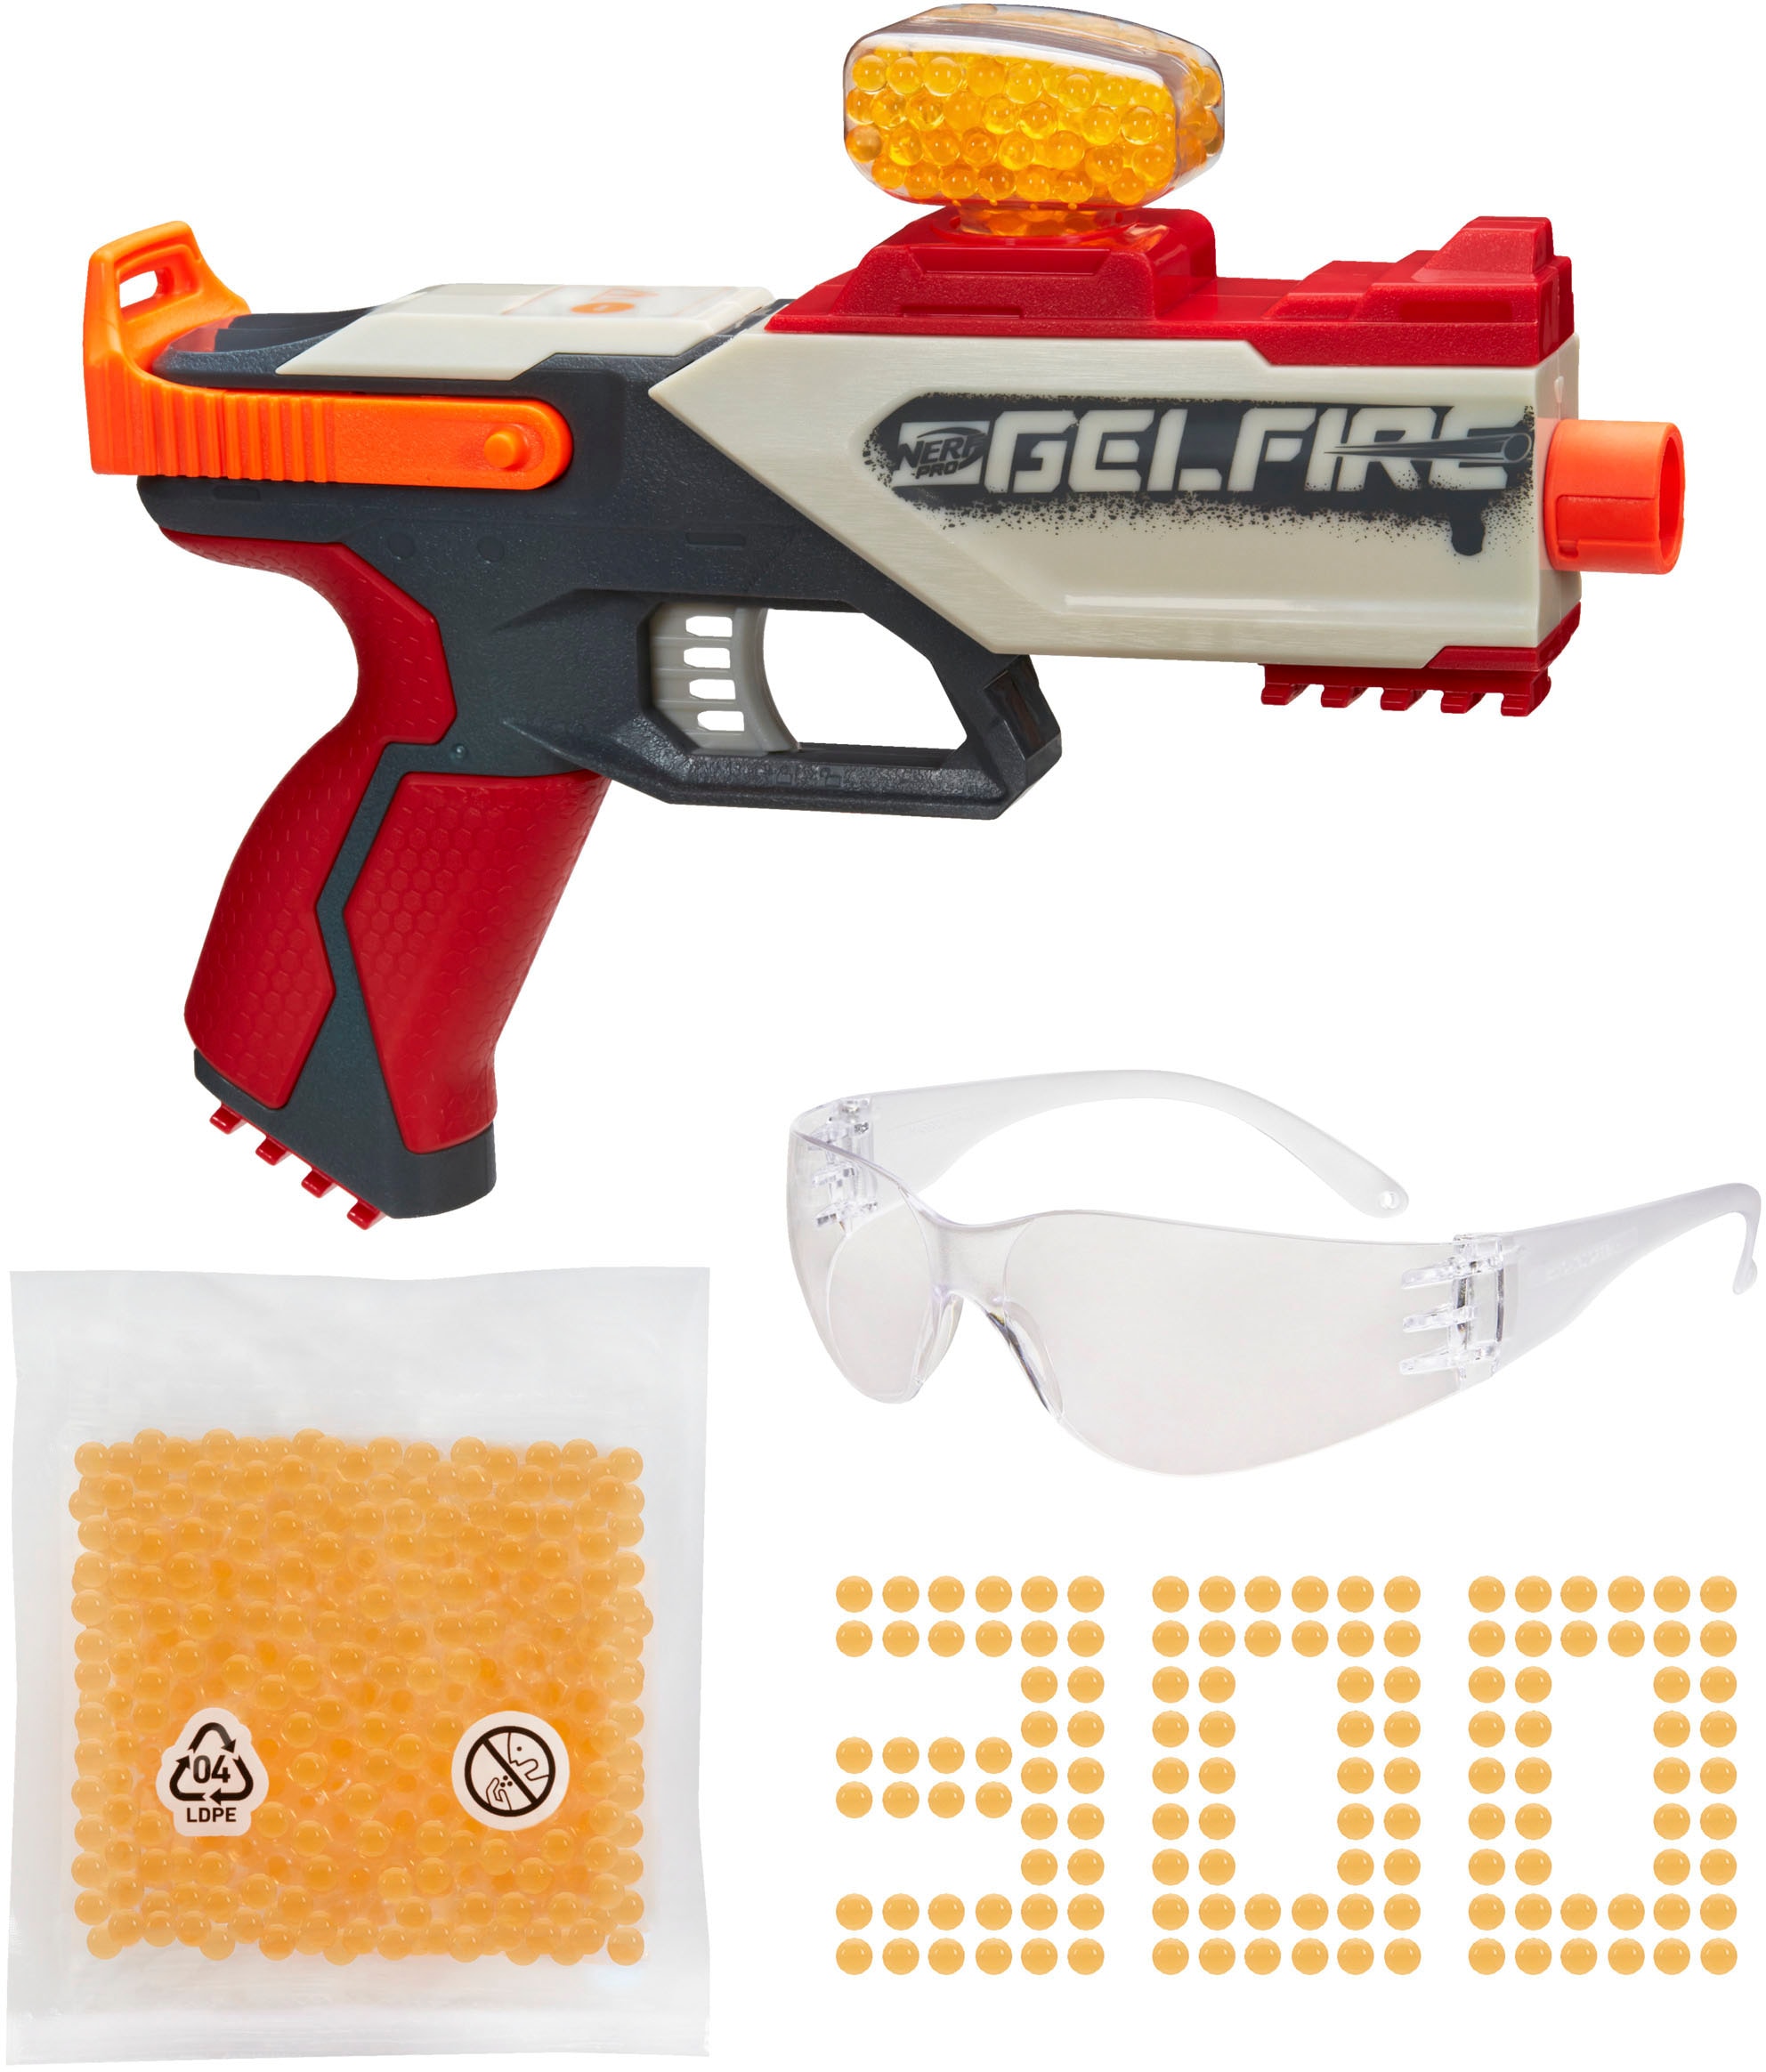 Hasbro Blaster »Nerf Pro Gelfire Legion«, inkl. 300 hydrierte Gelfire Kugeln